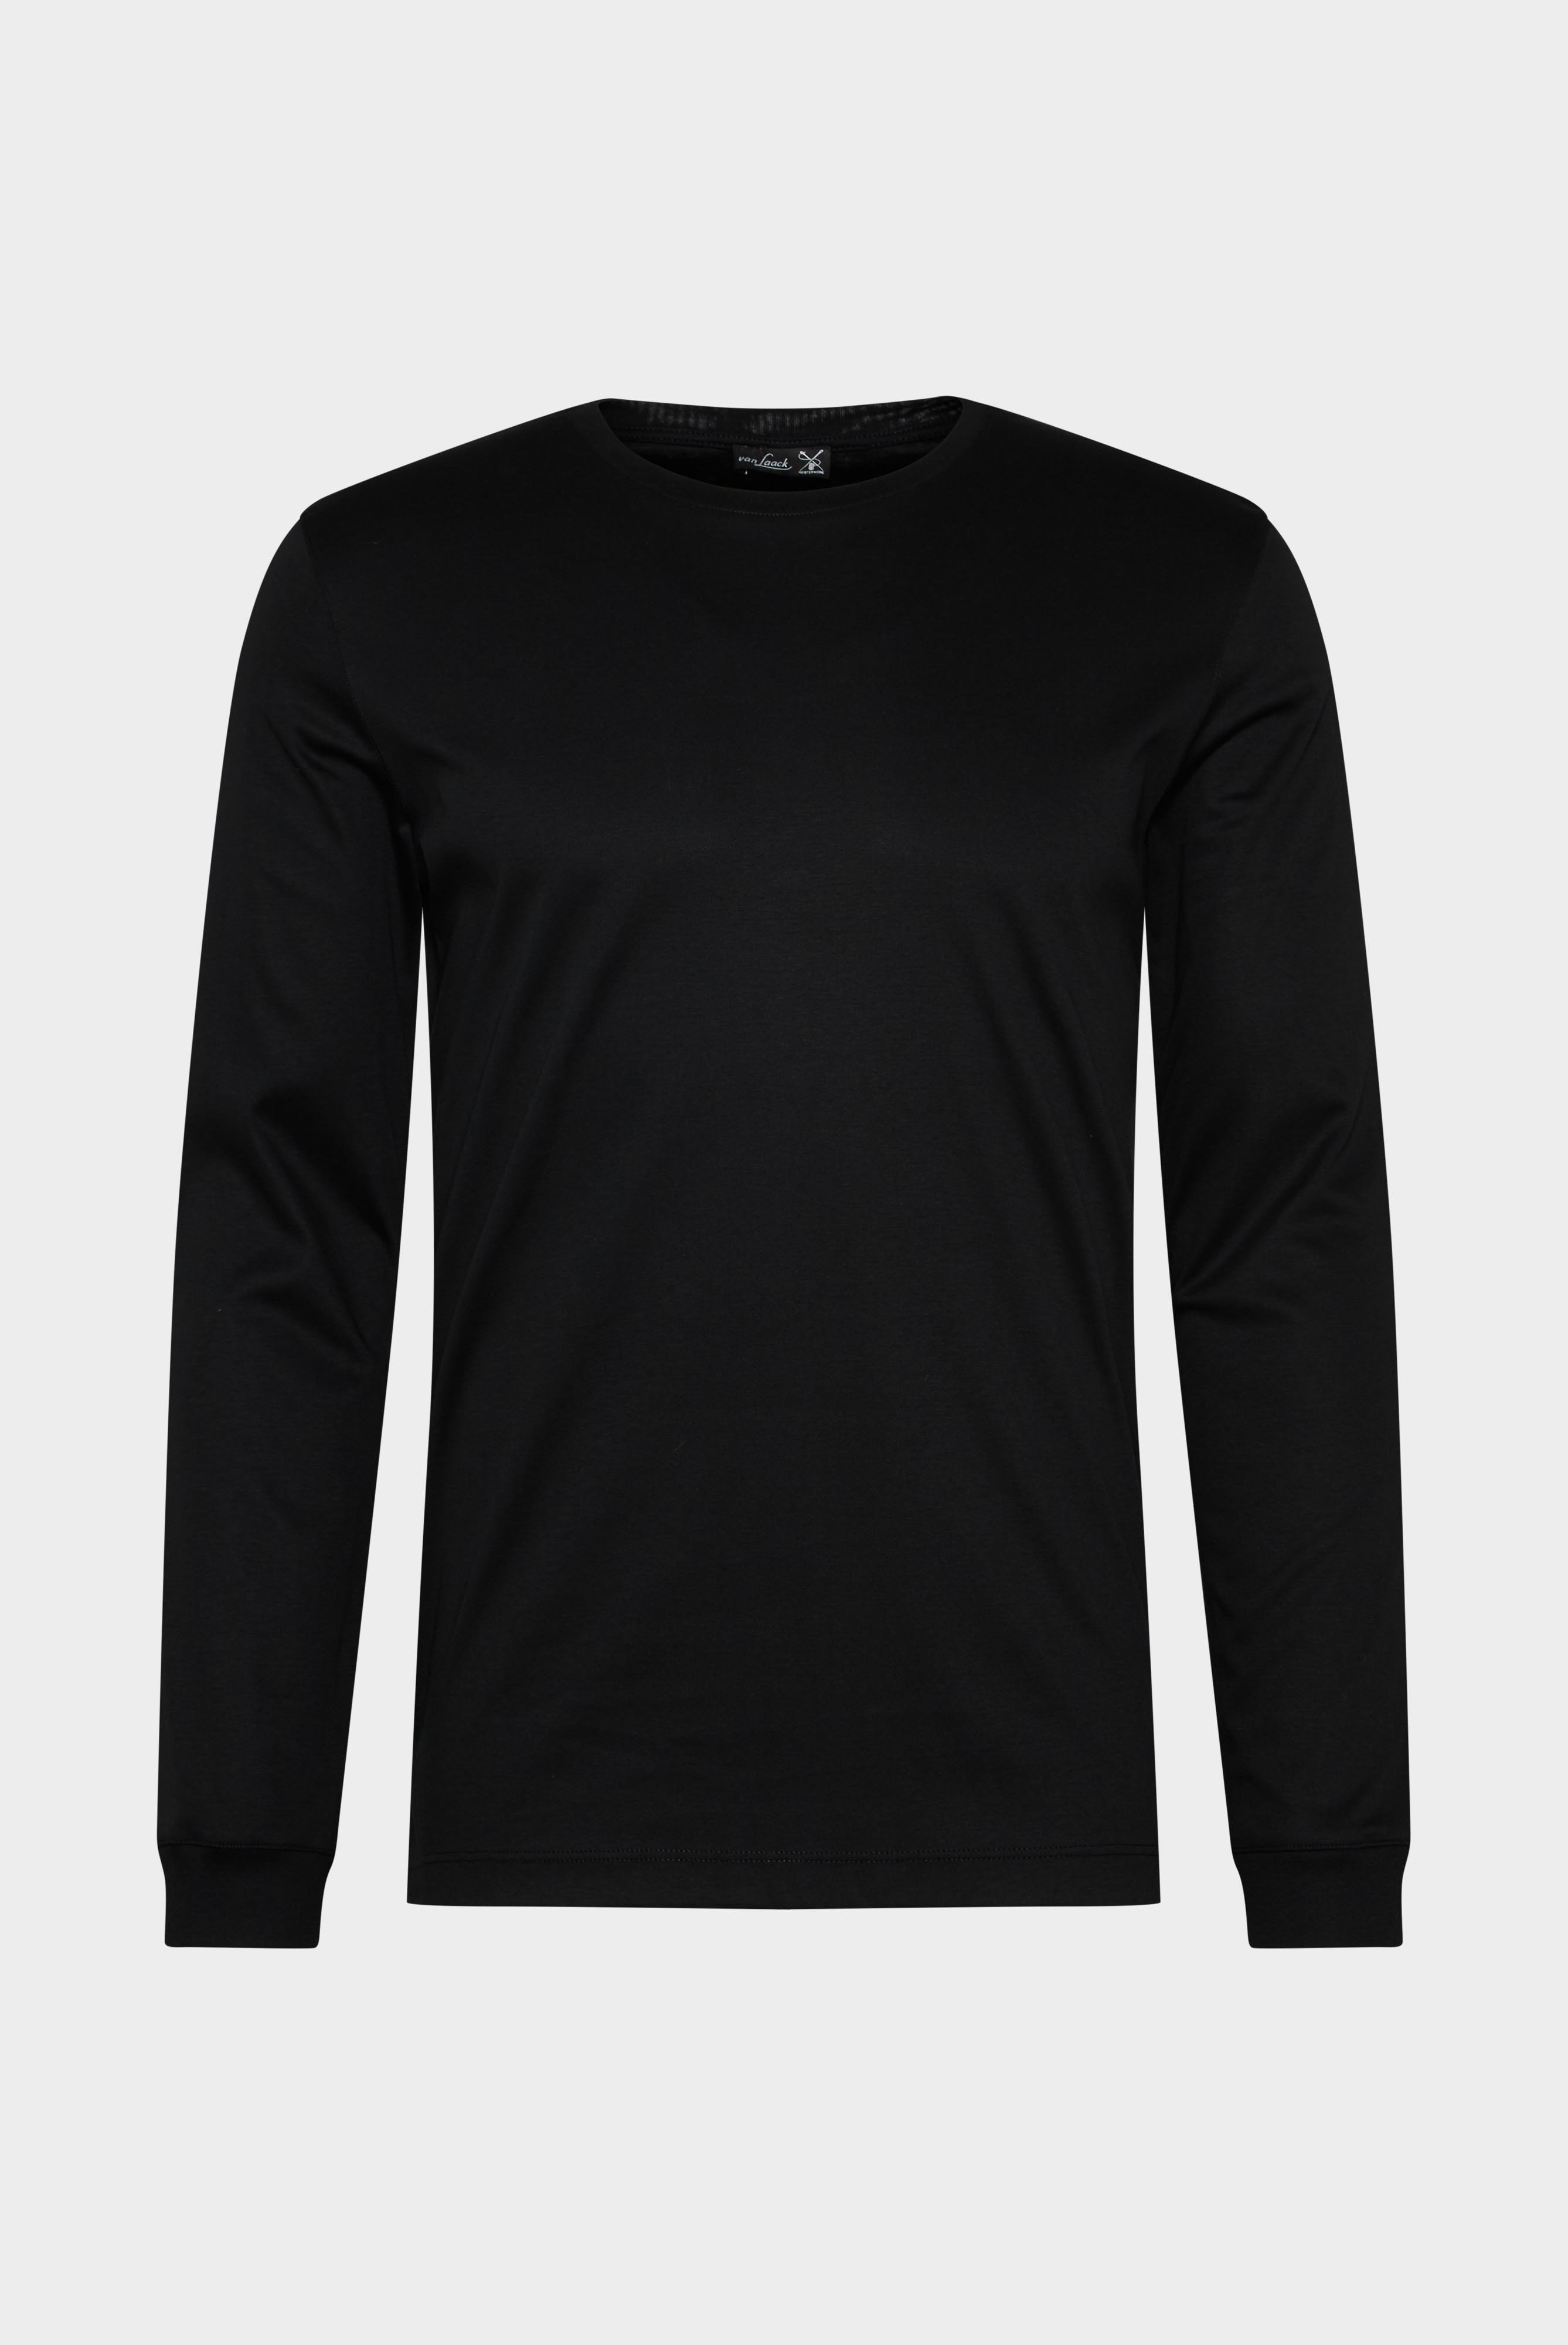 T-Shirts+Langarm Jersey T-Shirt mit Rundhals Slim Fit+20.1718.UX.180031.099.XXL